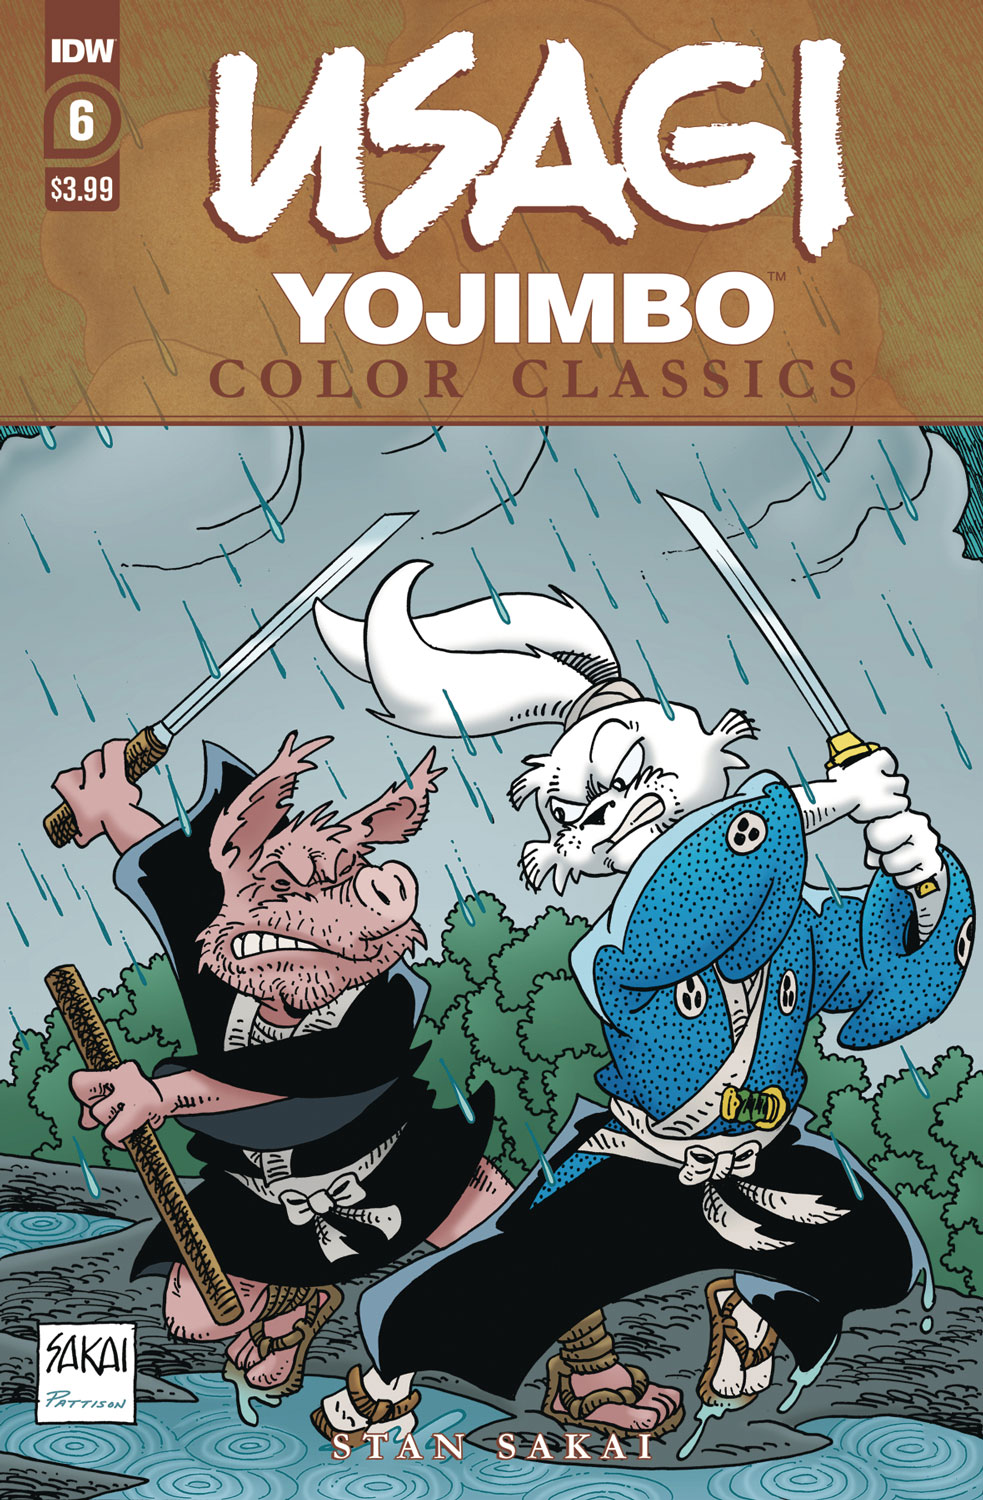 yojimbo wiki